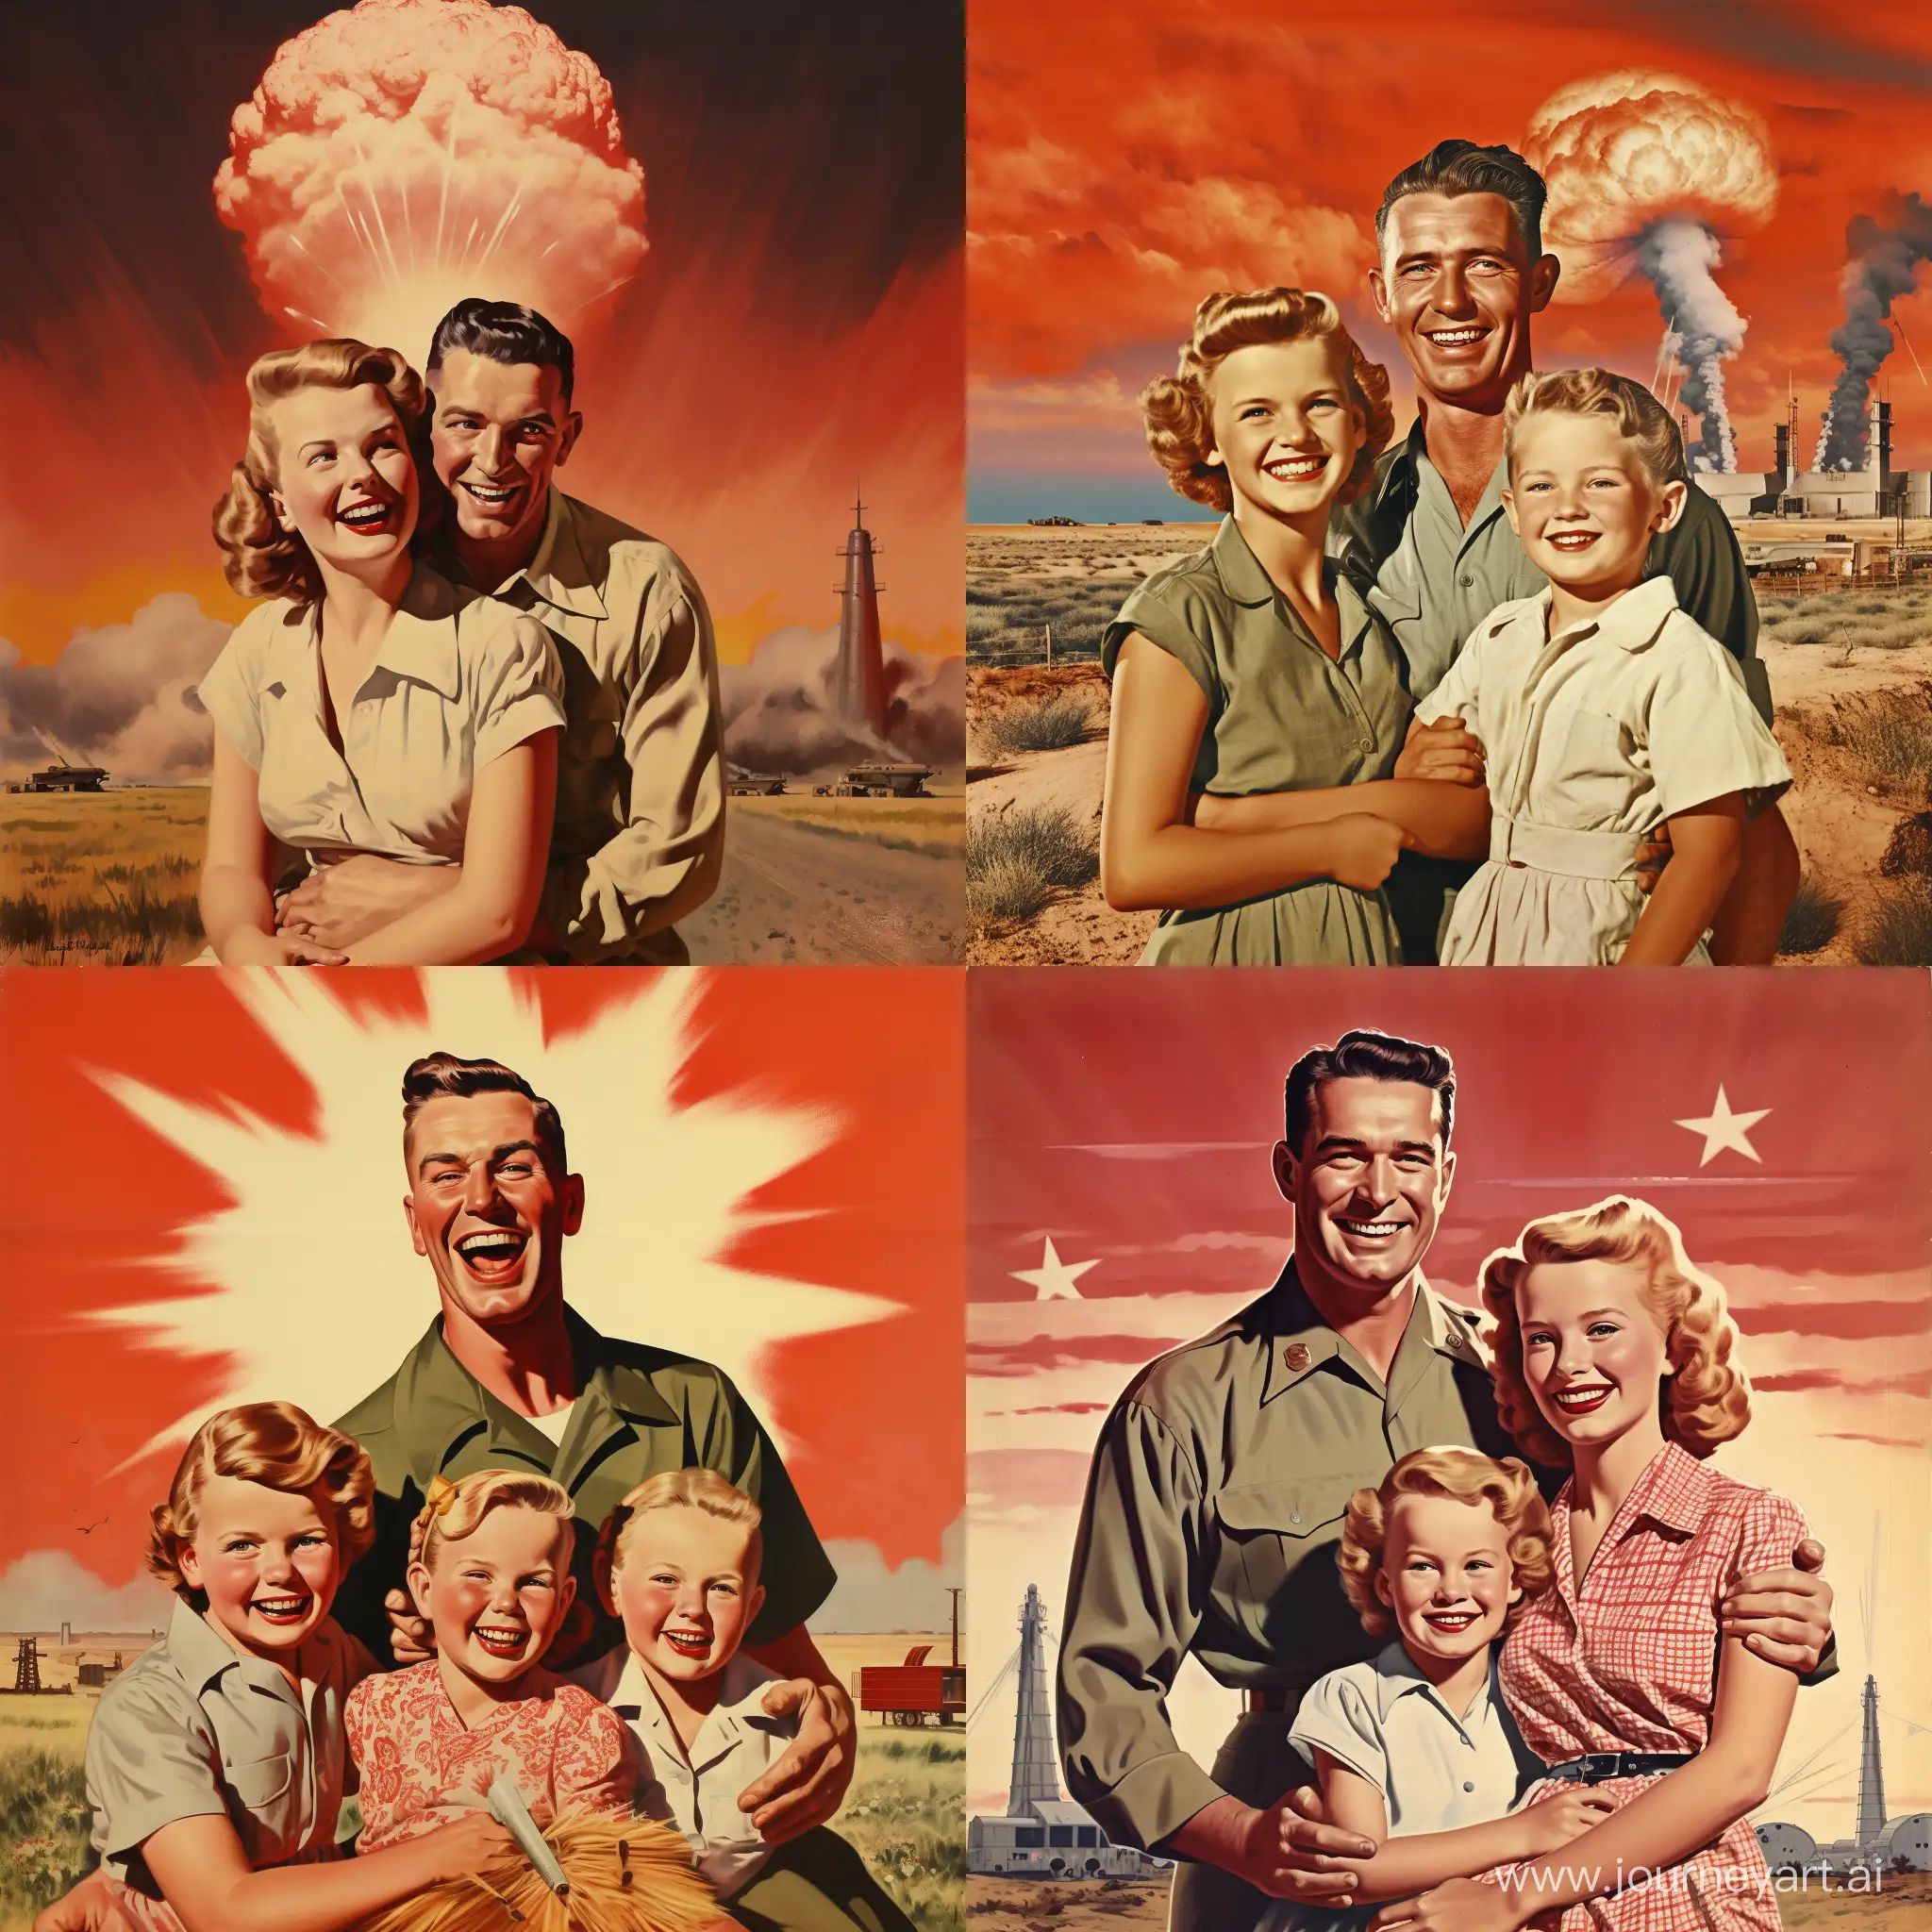 1940s nuclear family, smiling at camera, wasteland background, American world war 2 propaganda art style